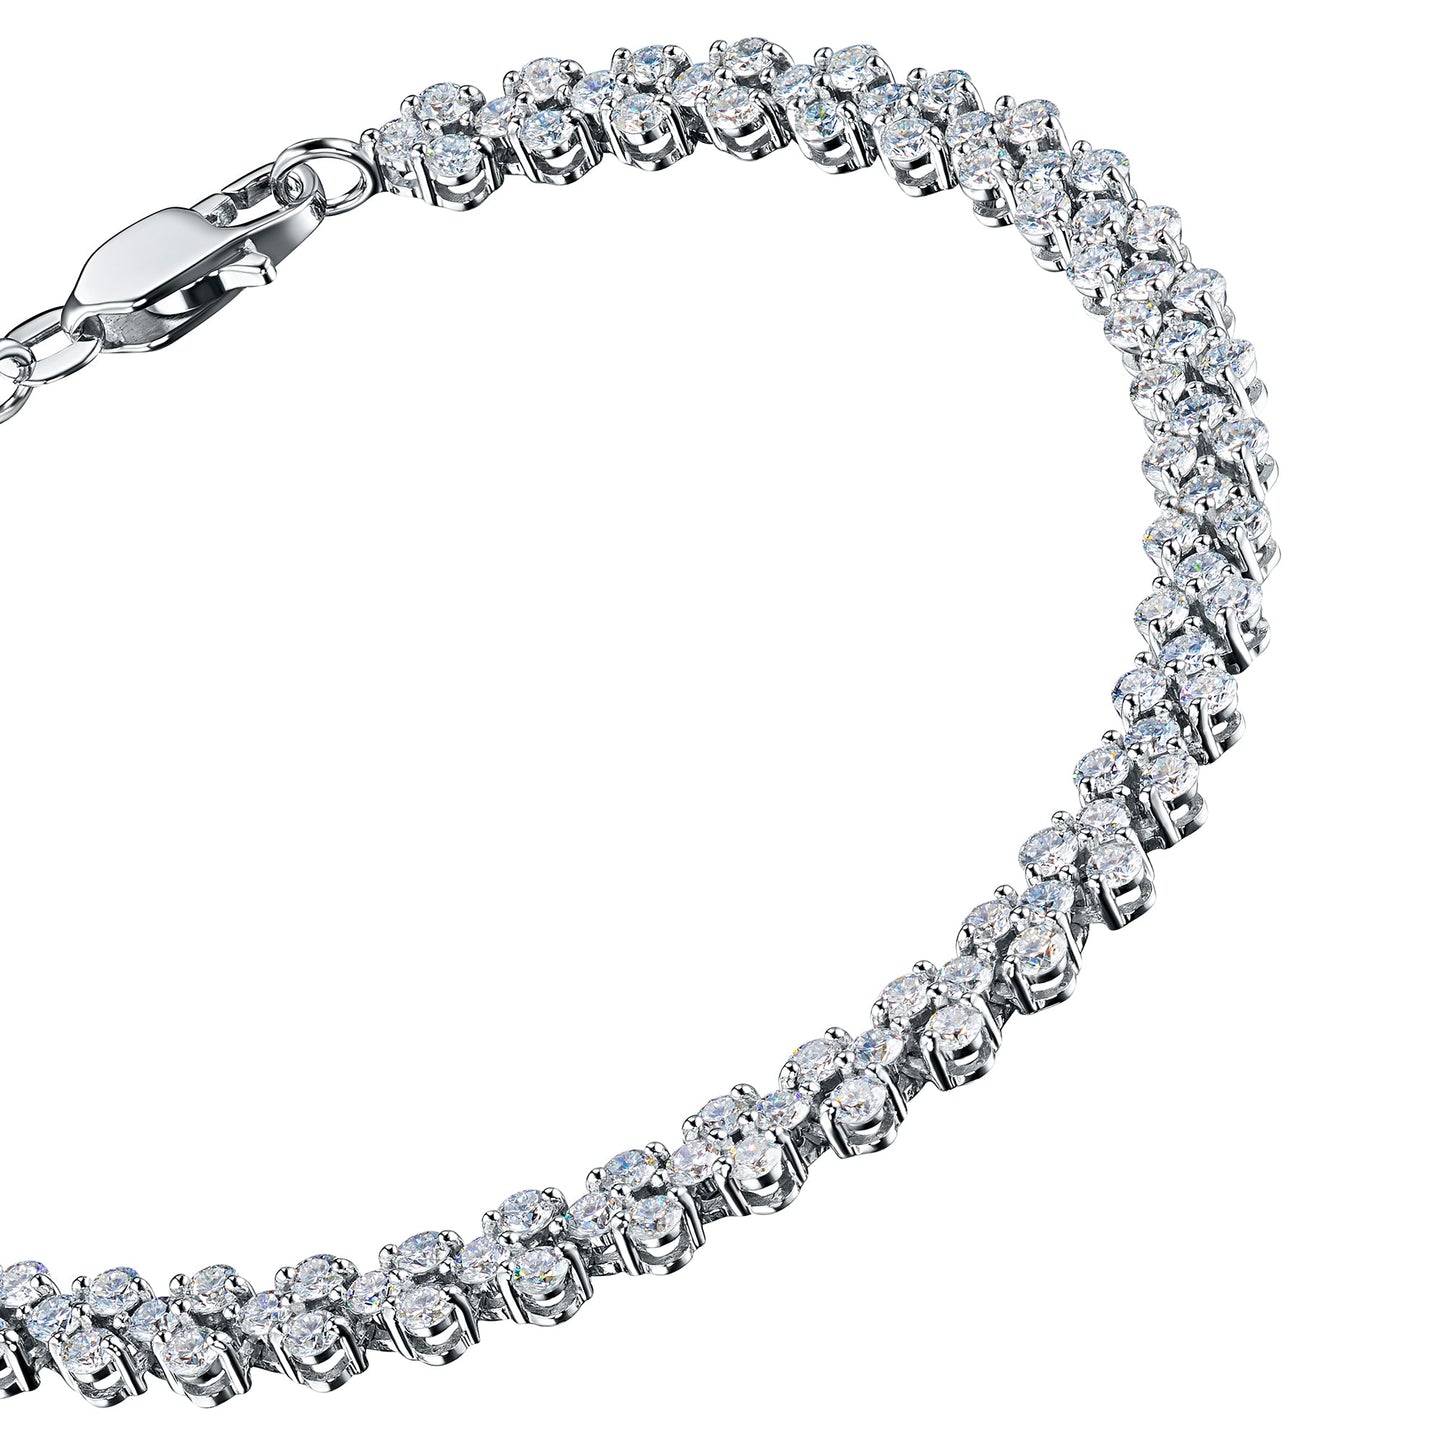 14K White Gold Bracelet with 124 Round-Cut Lab-Created Diamonds 4.337